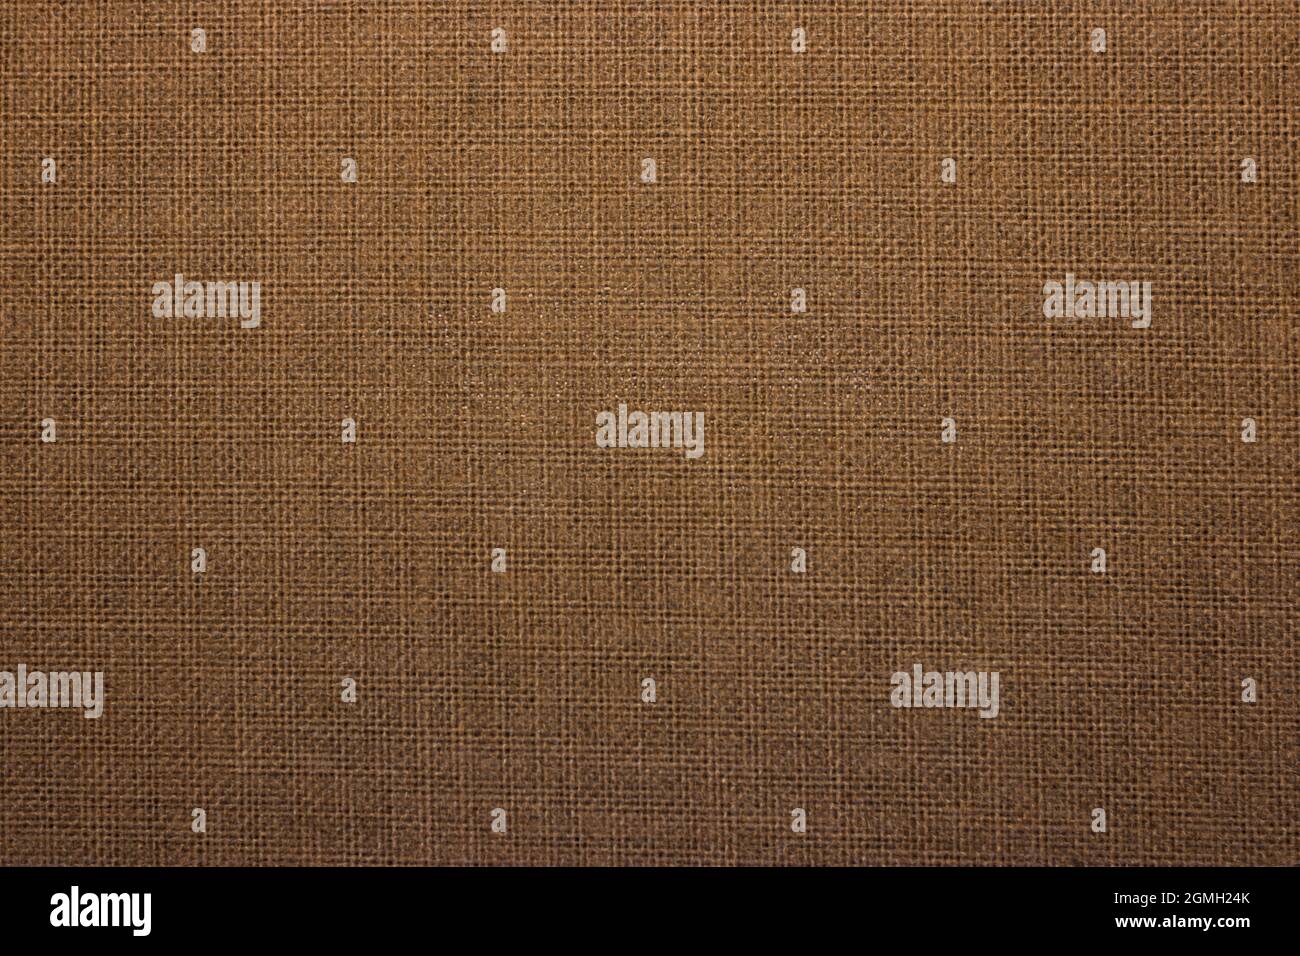 Primer plano saco con textura de fondo; marrón, rústico, tejido textura de tela Foto de stock